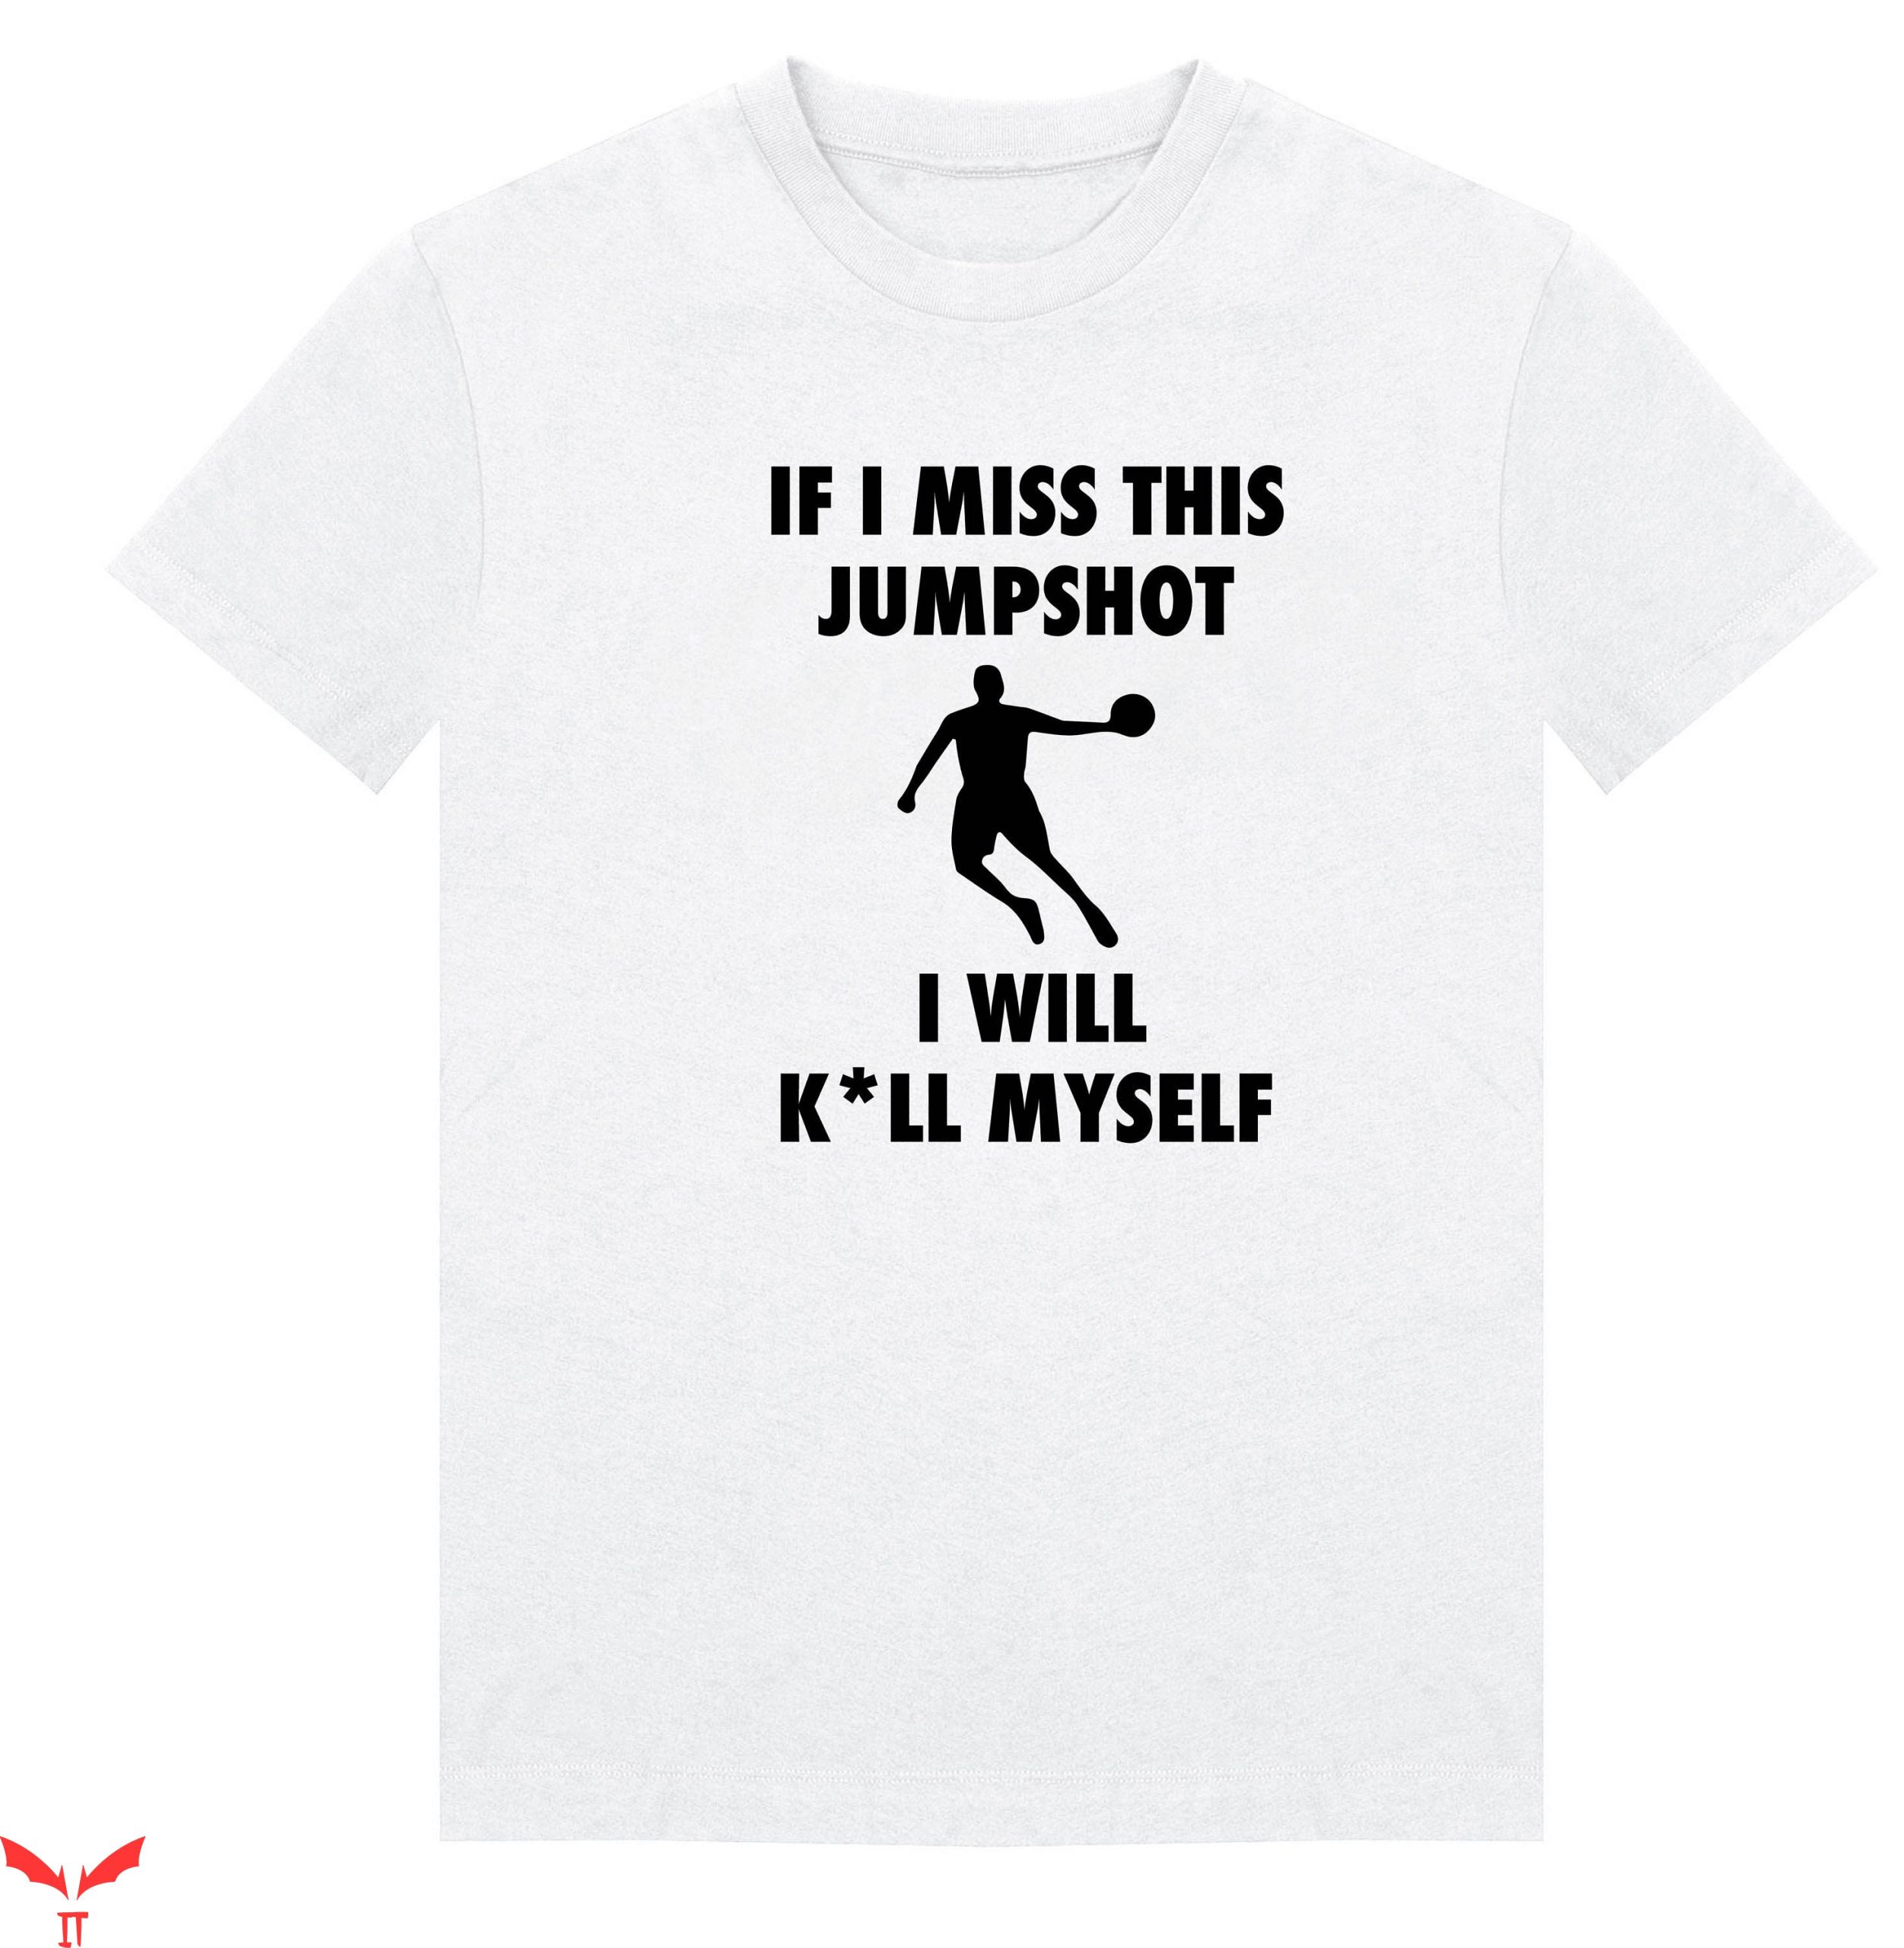 If I Miss This Jumpshot I'll Kill Myself T-Shirt Cool Meme